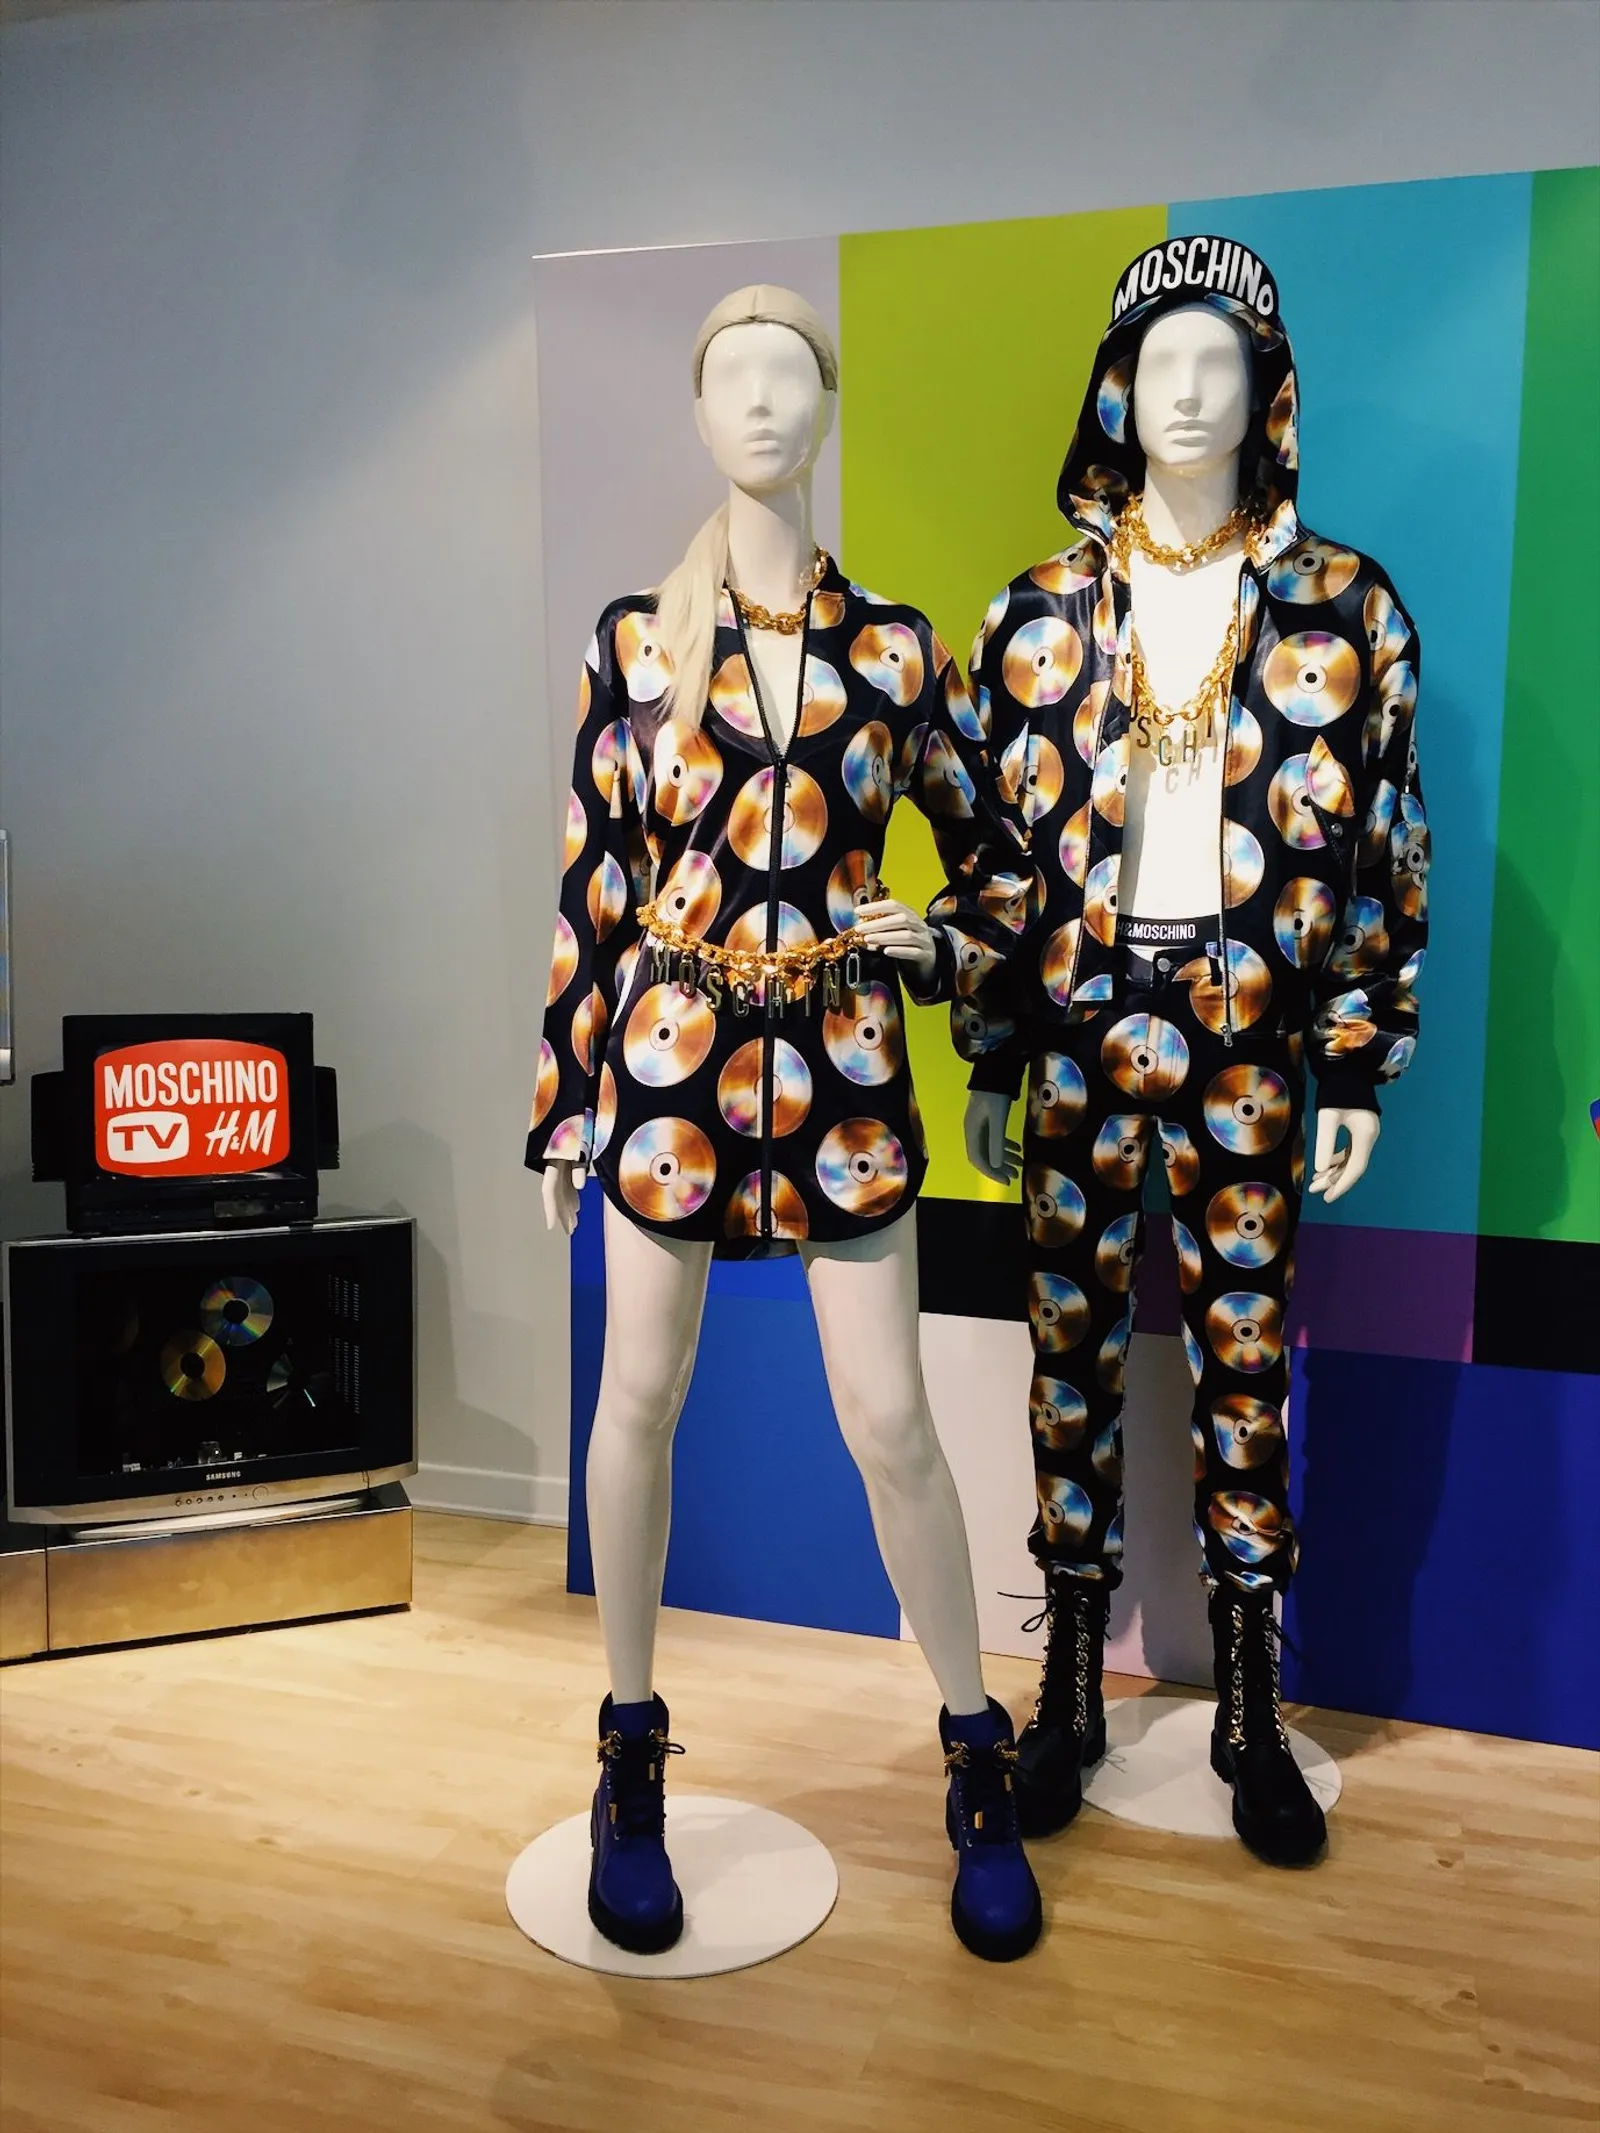 MOSCHINO [tv] H&M dan Koleksi ‘90an yang Party!